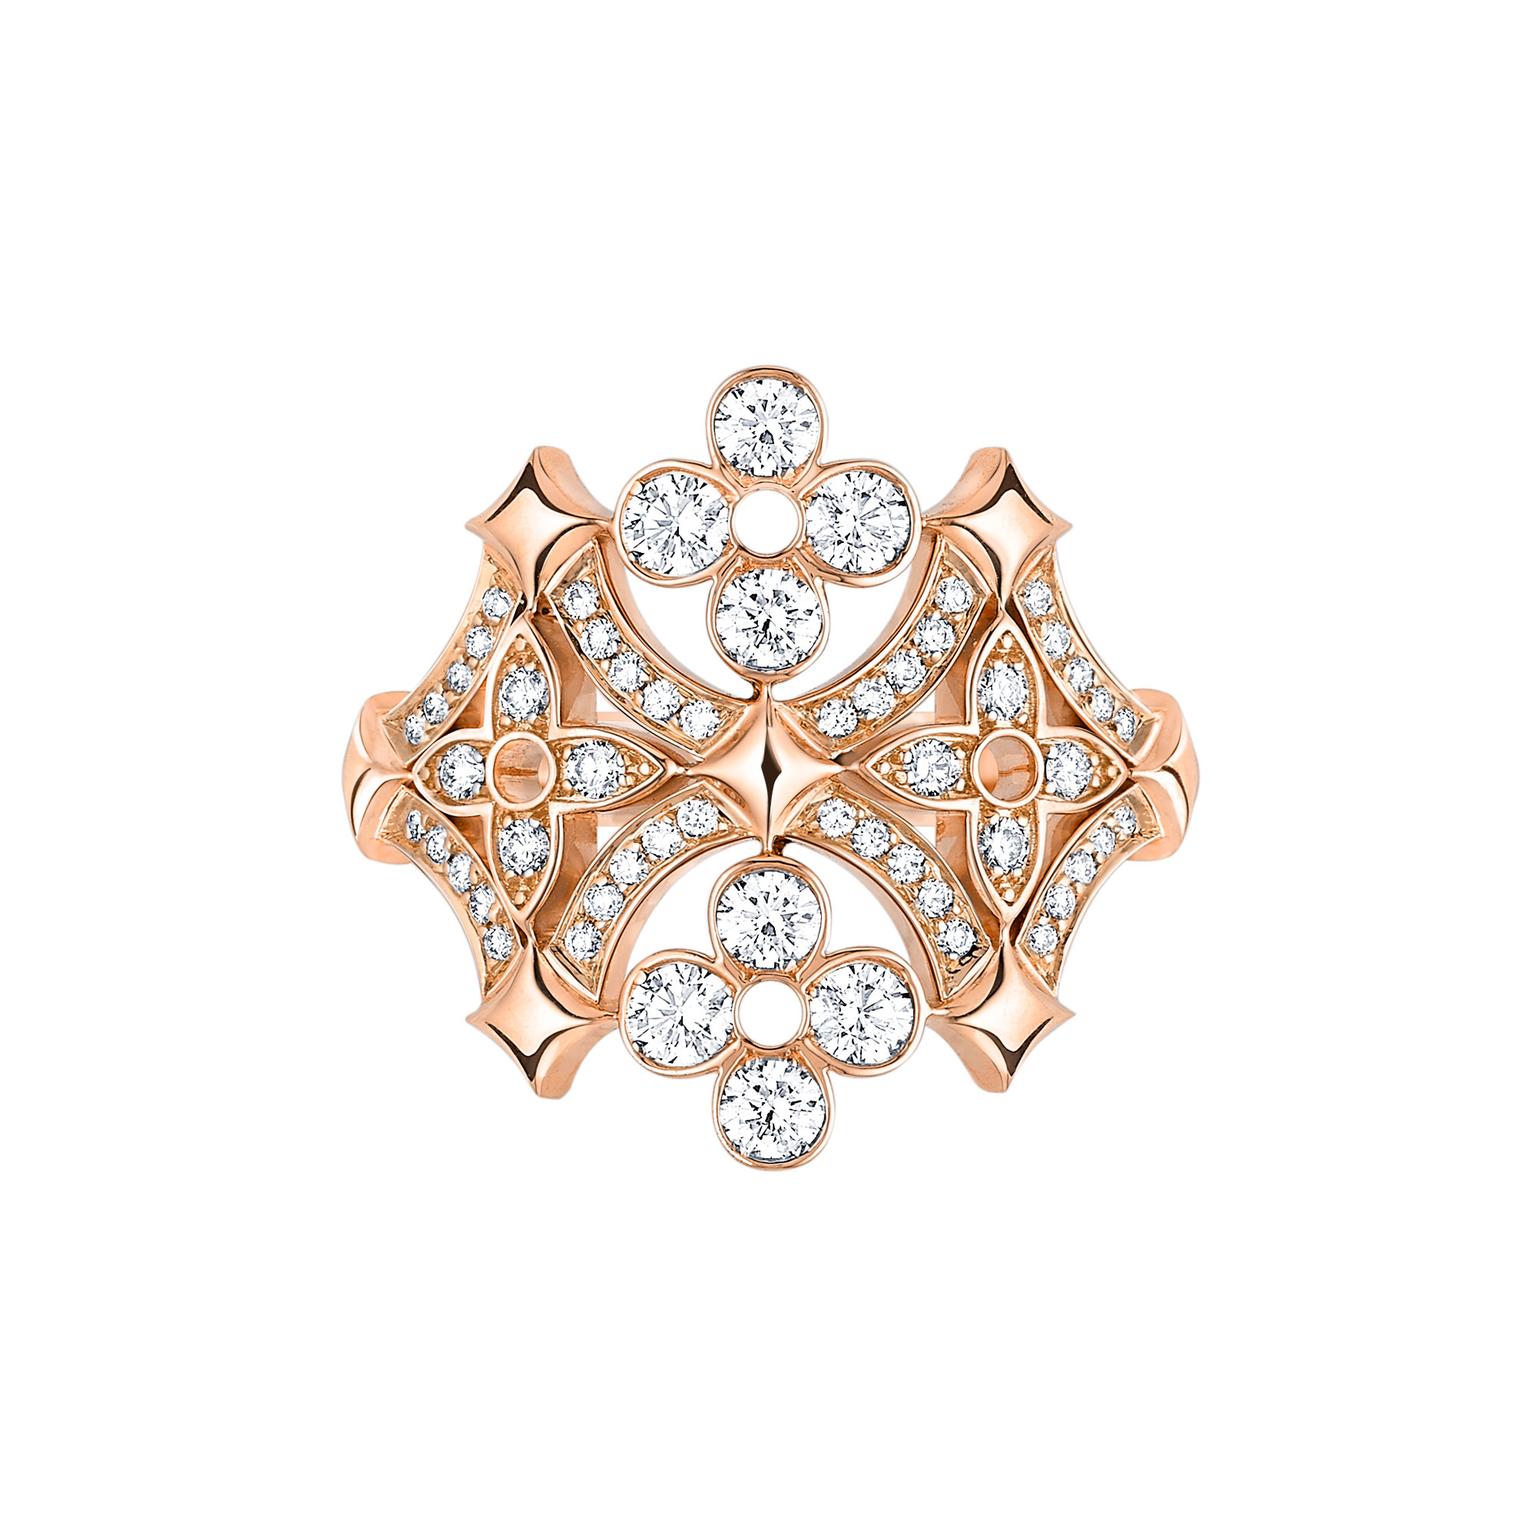 Louis Vuitton Dentelle de Monogram bracelet with diamonds set in white gold  to recreate the de…